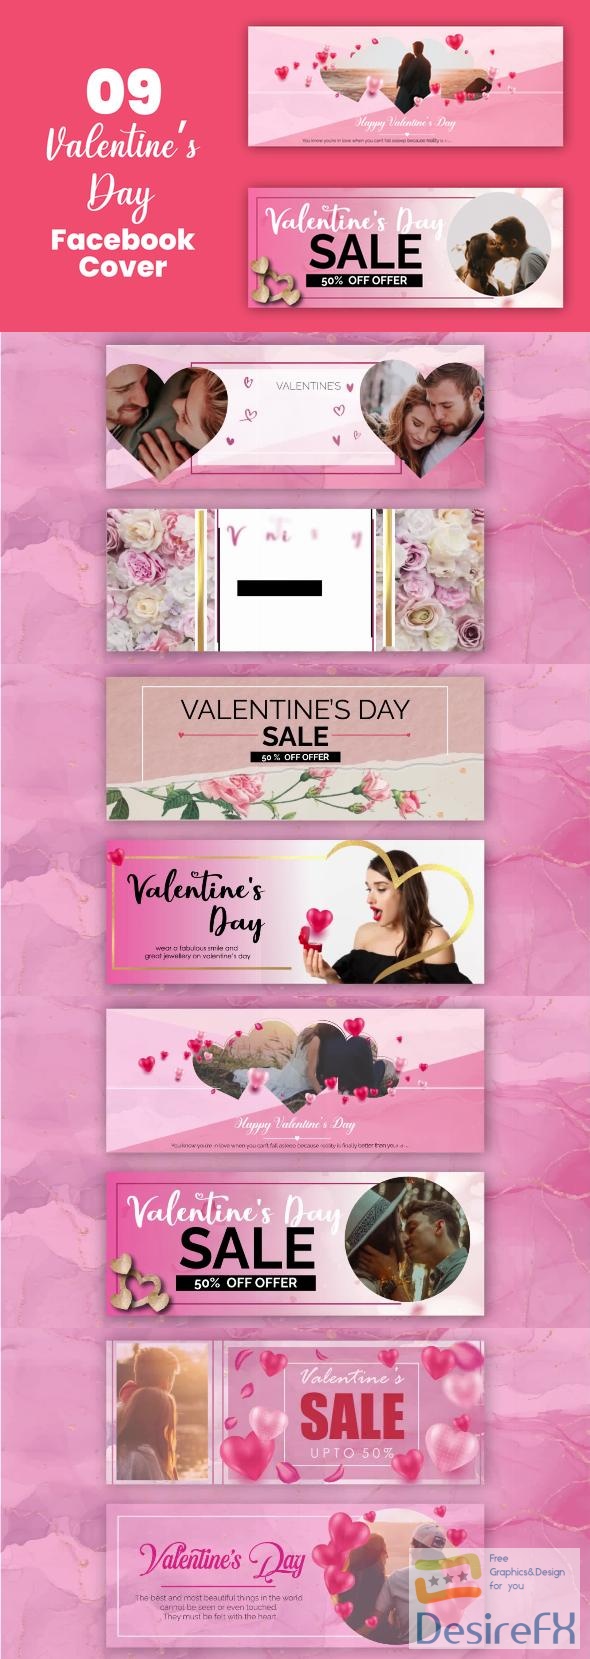 VideoHive Valentine Sale Offer Facebook Cover 35758596